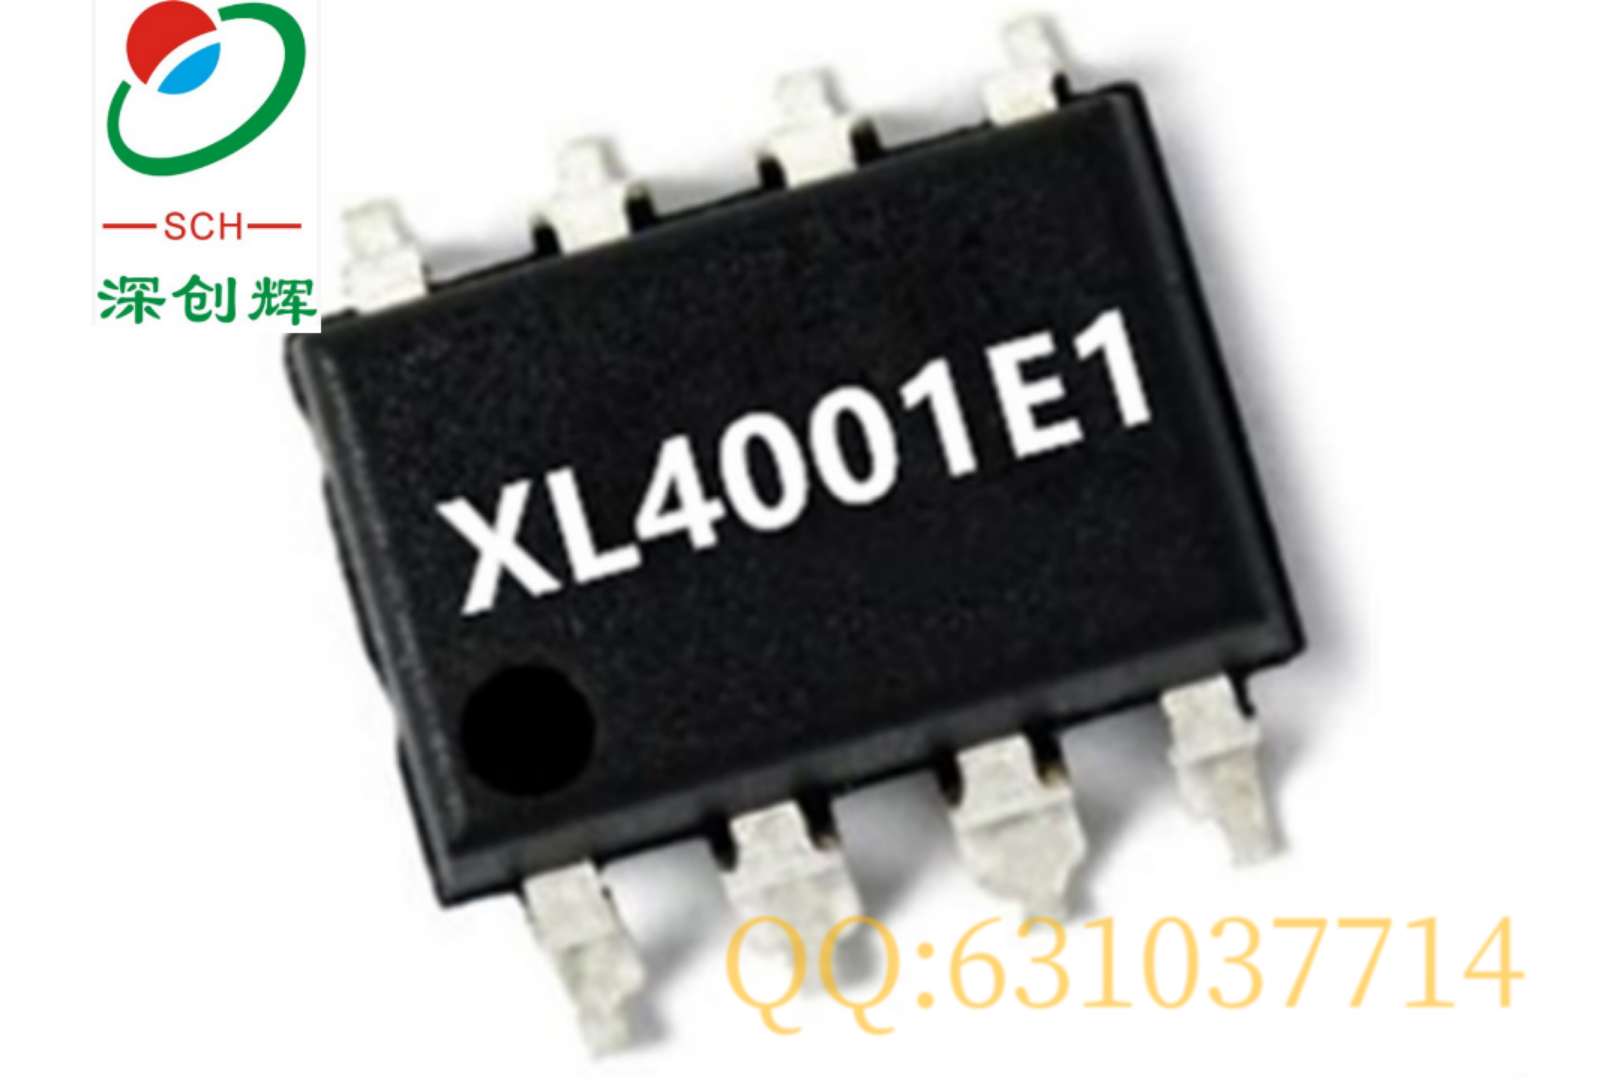 XL 4001自带恒压恒流环路的降压型直流电源变换器芯片  XL 4001直流电源变换器芯片图片